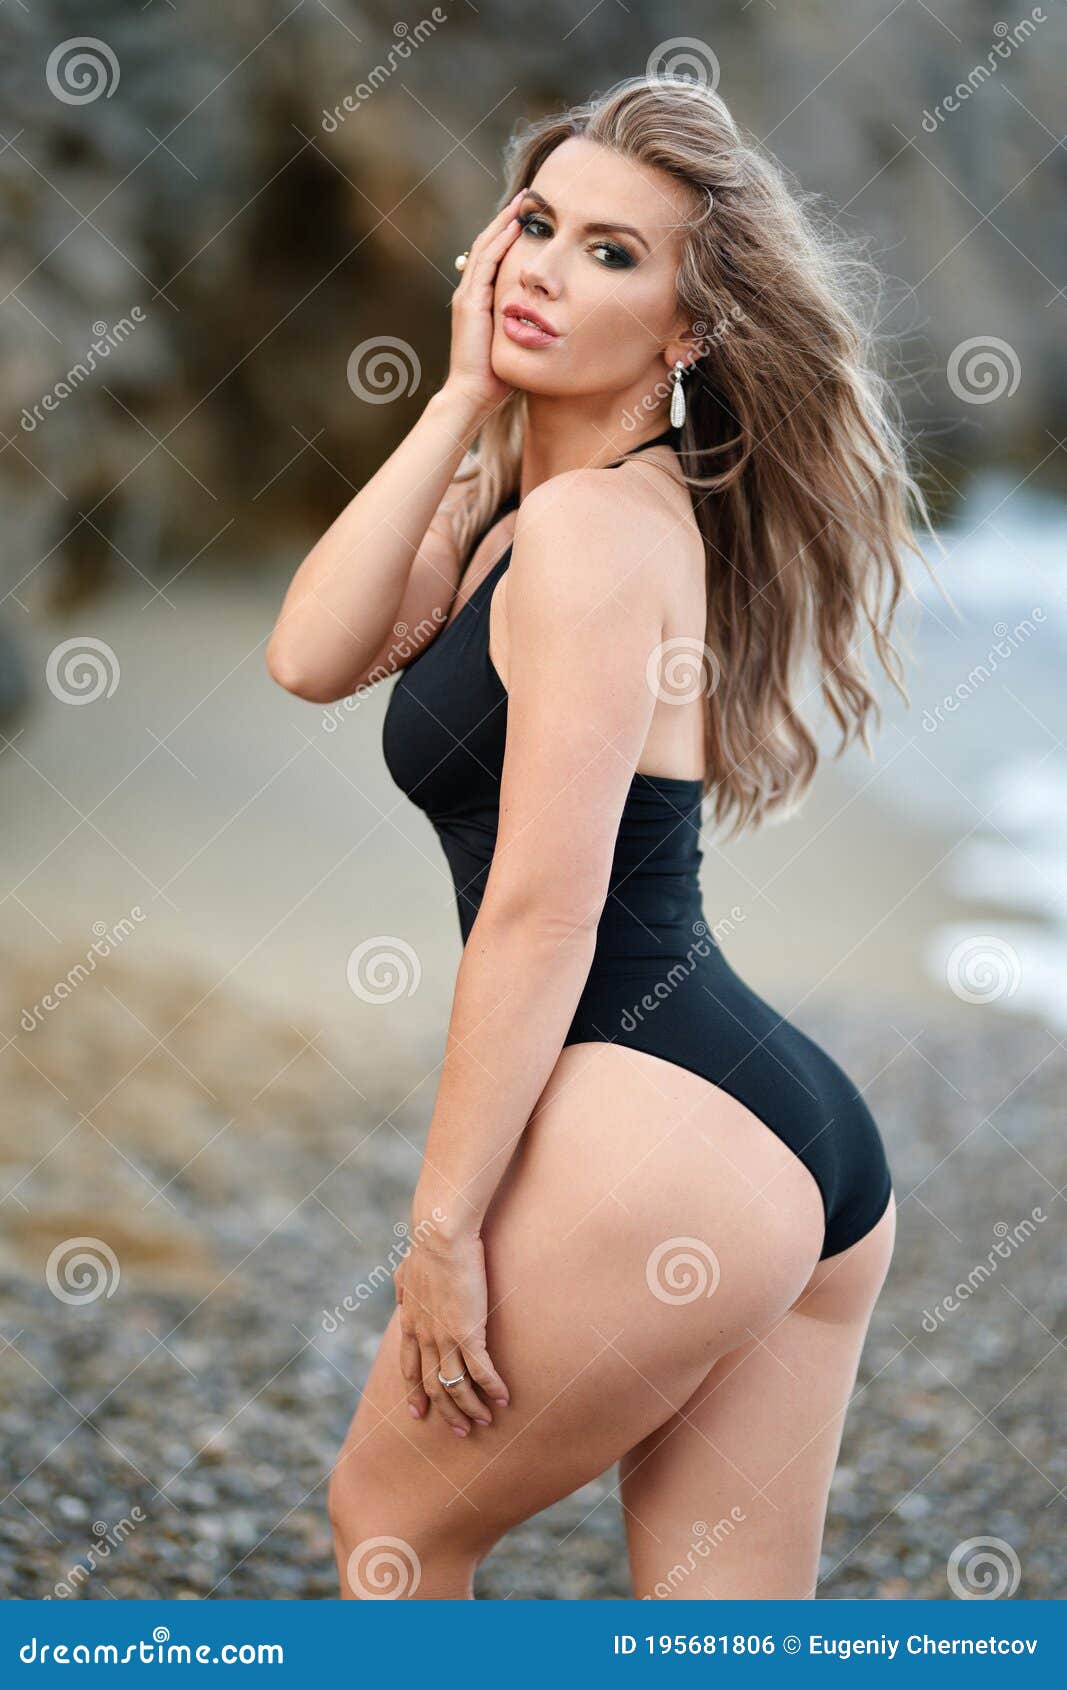 Sexy ass photos